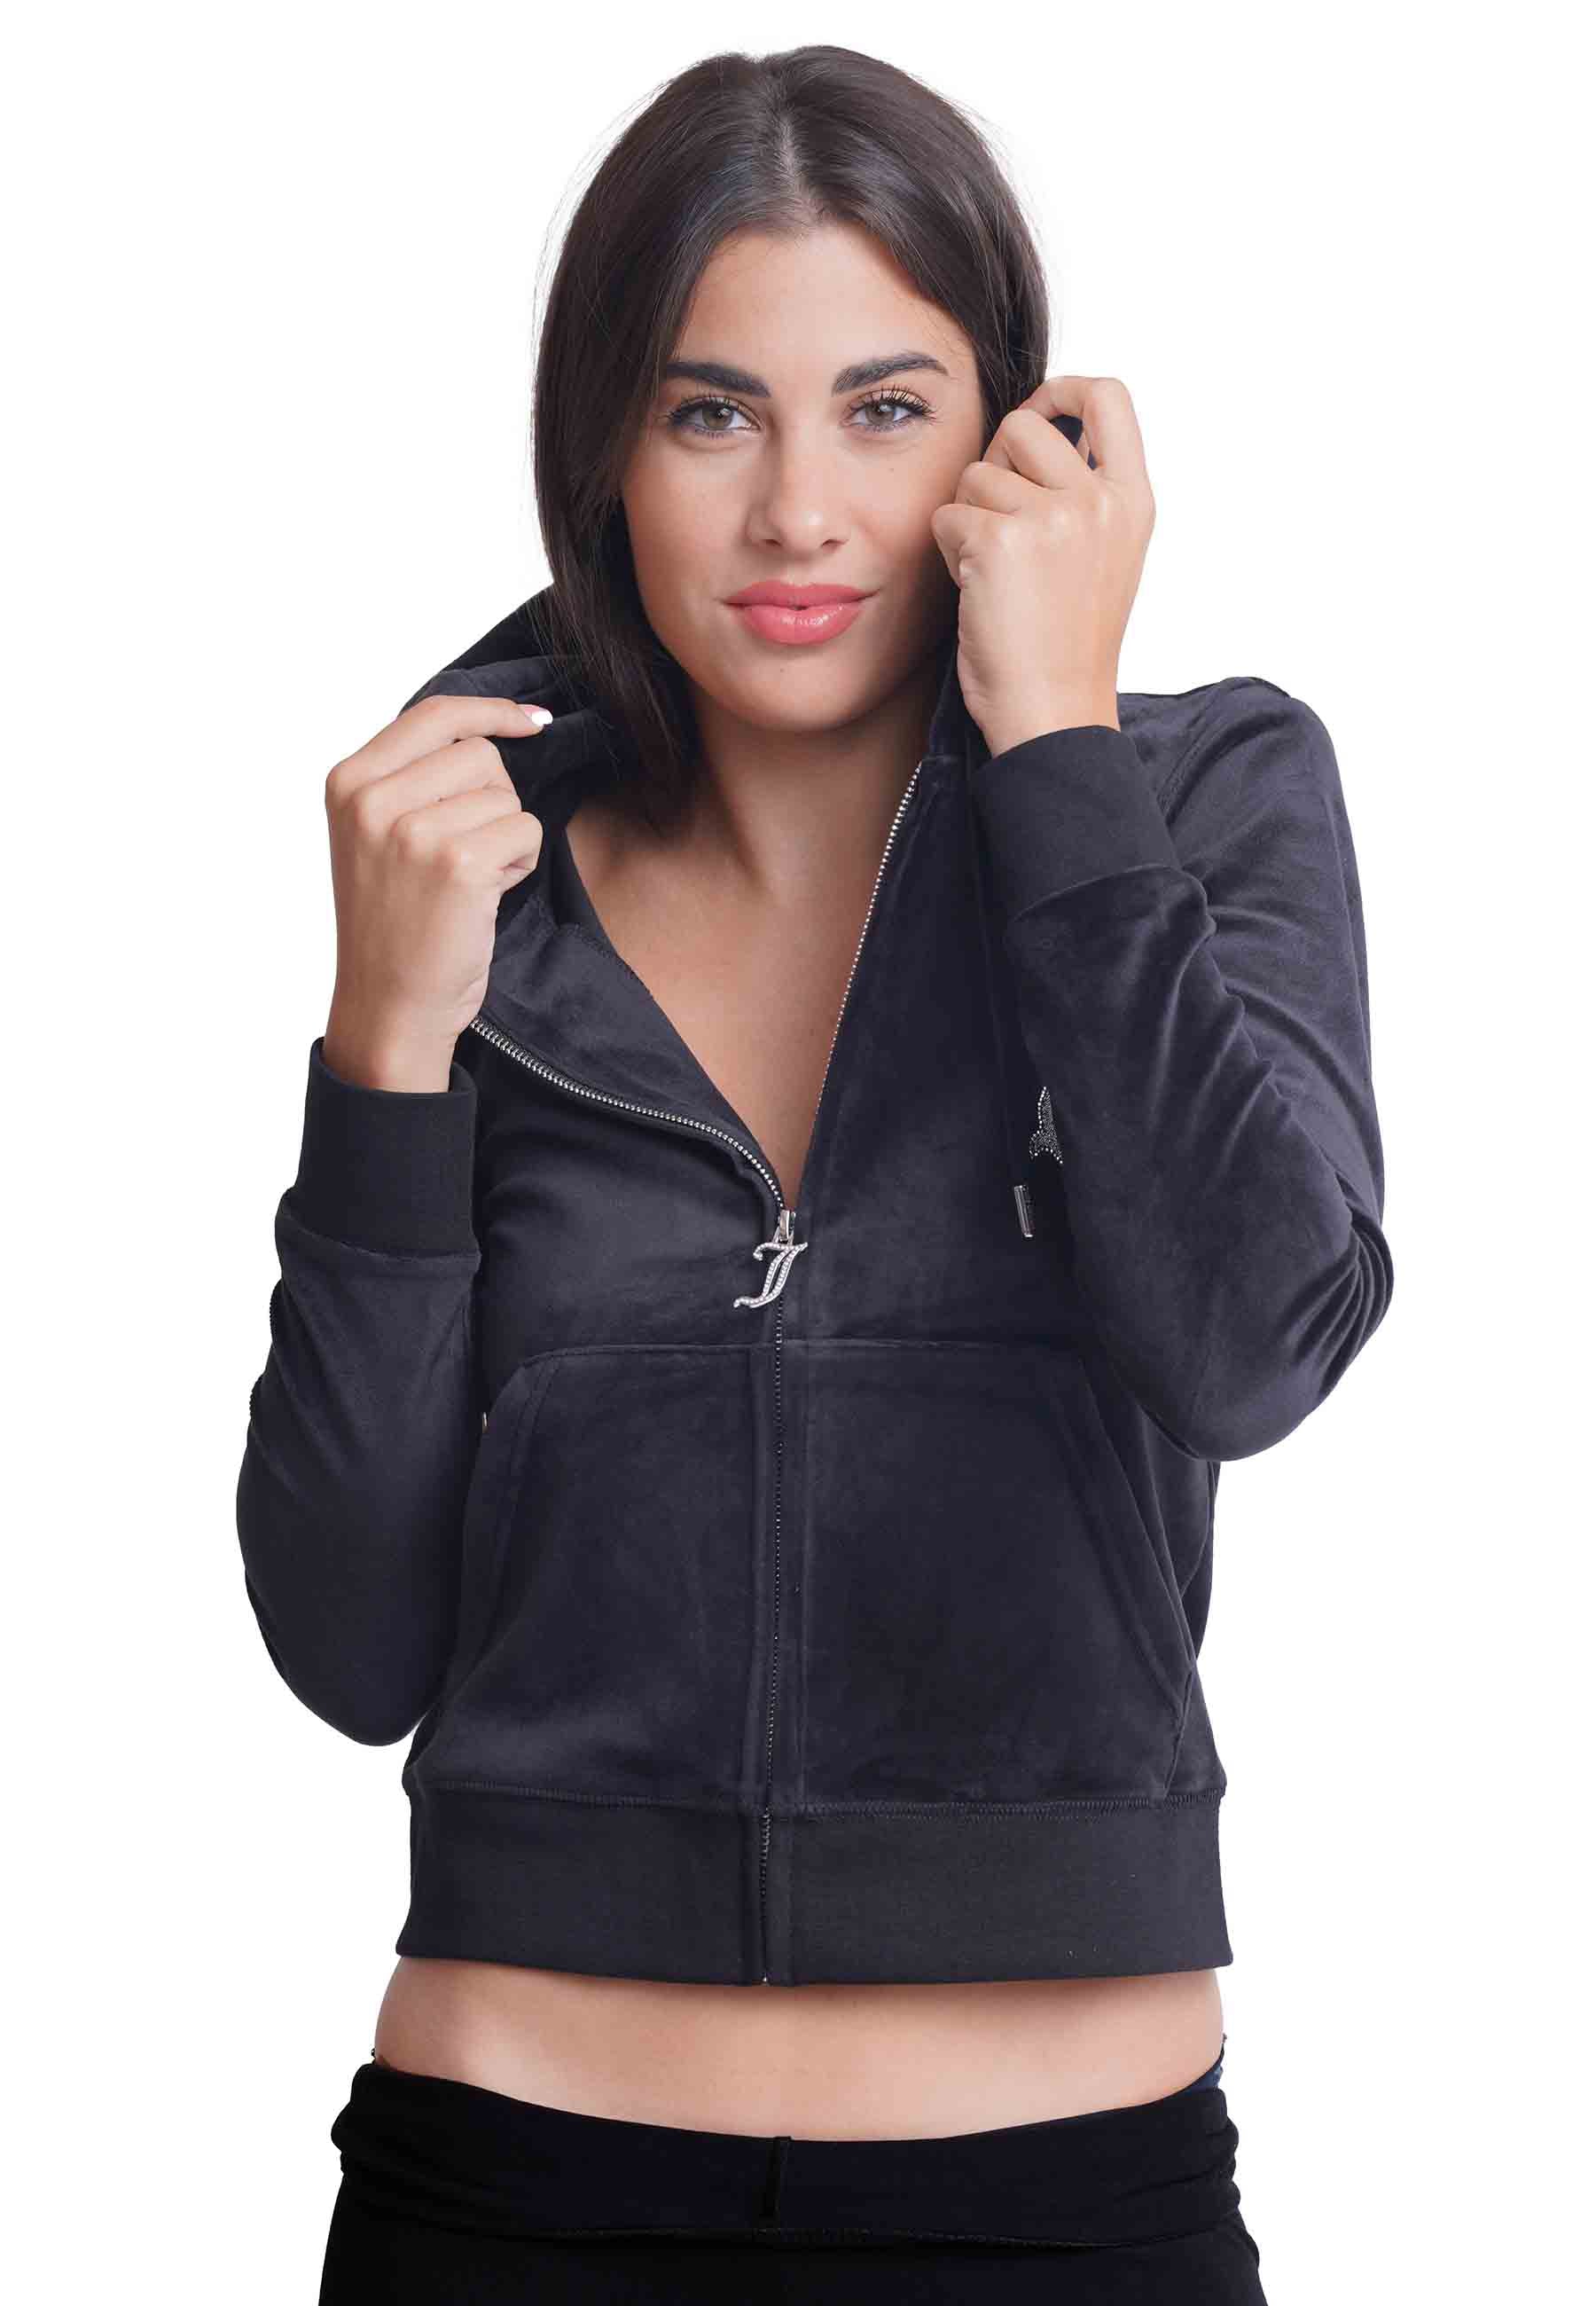 Diamond women's sweatshirt with hood in black velvet and rhinestones